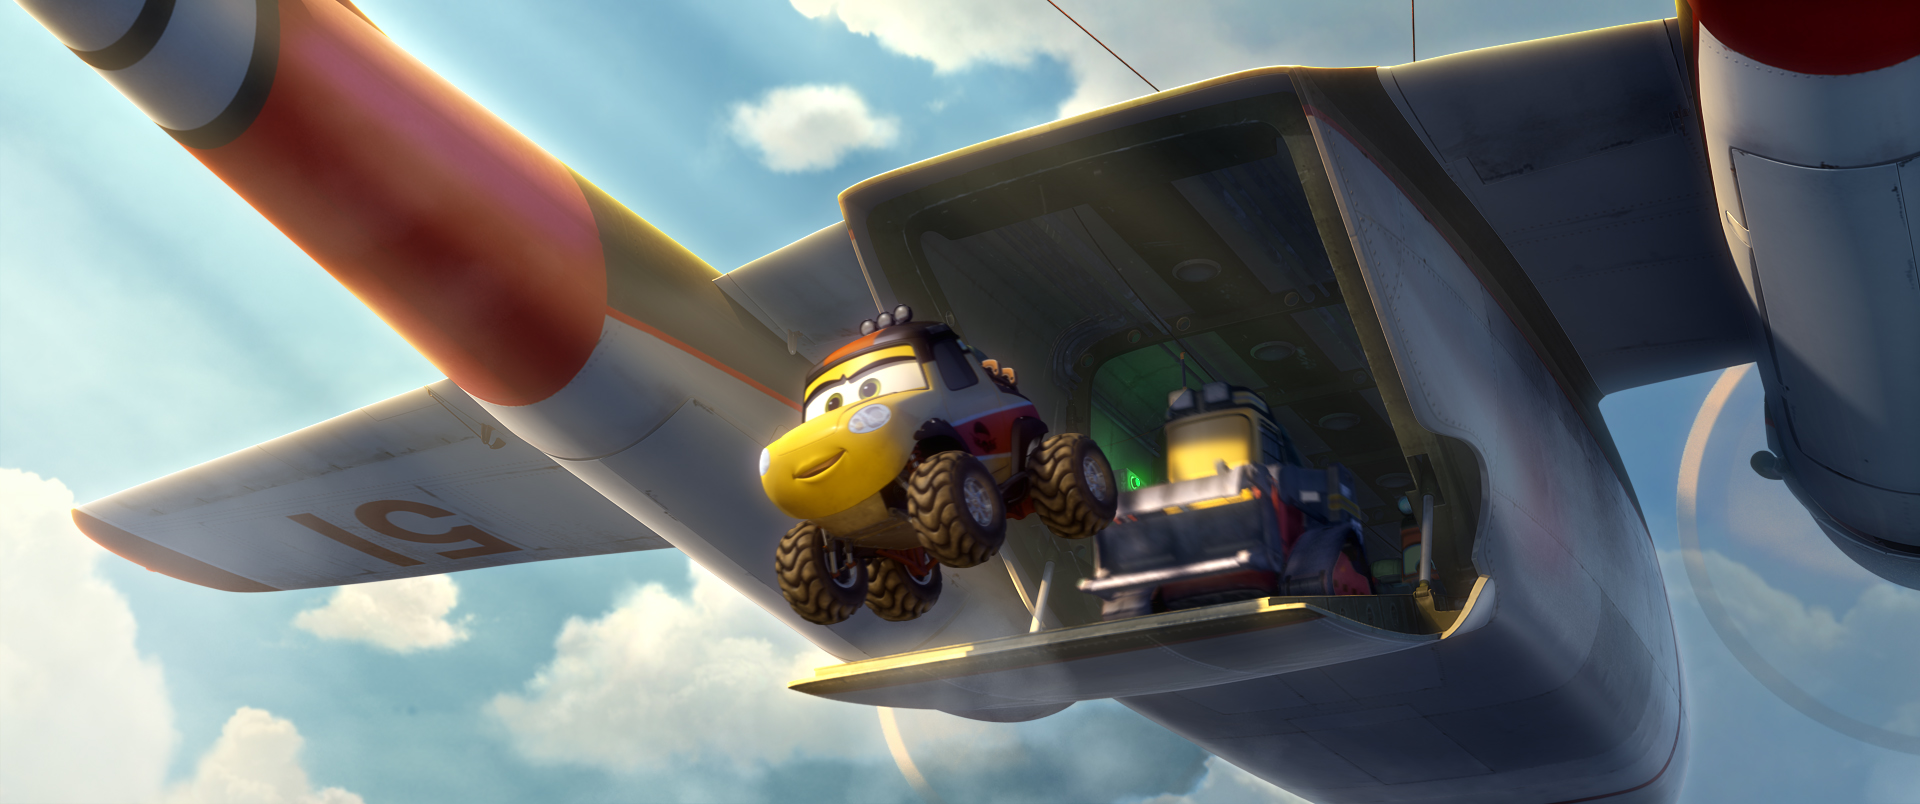 disney planes characters